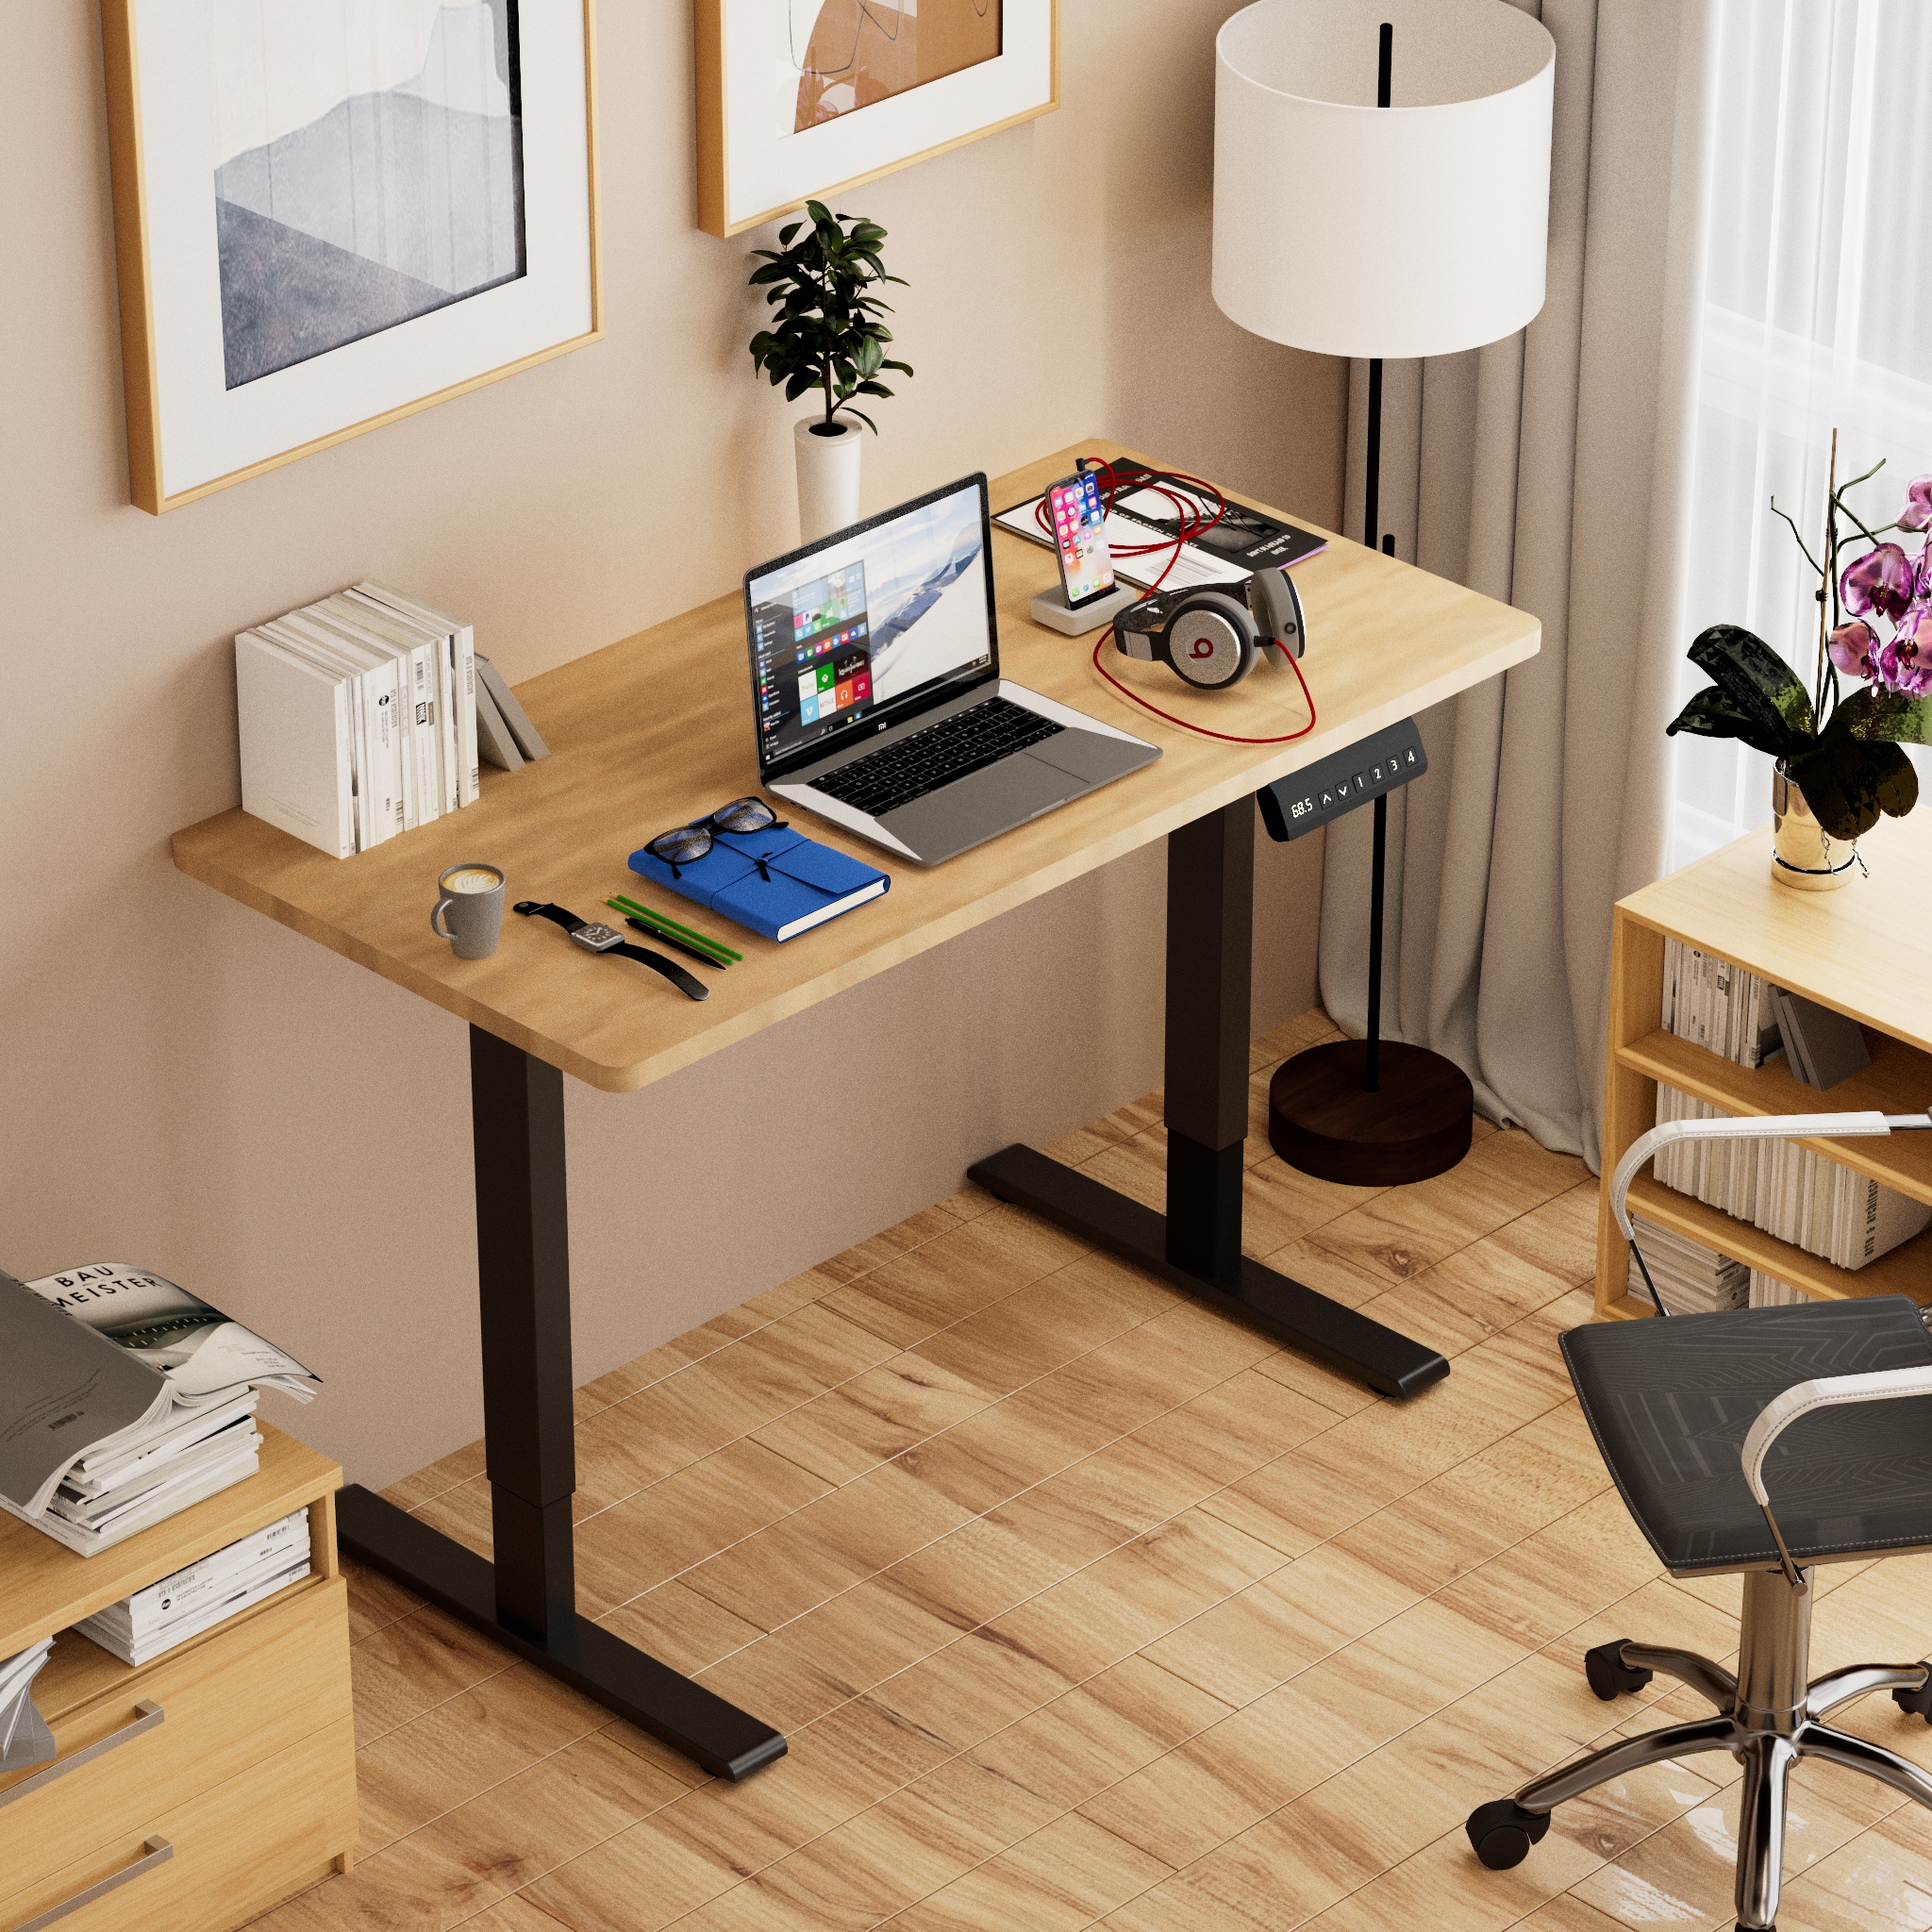 Multi-level Glass Sit-Stand Desk for Height Adjustable Workstation